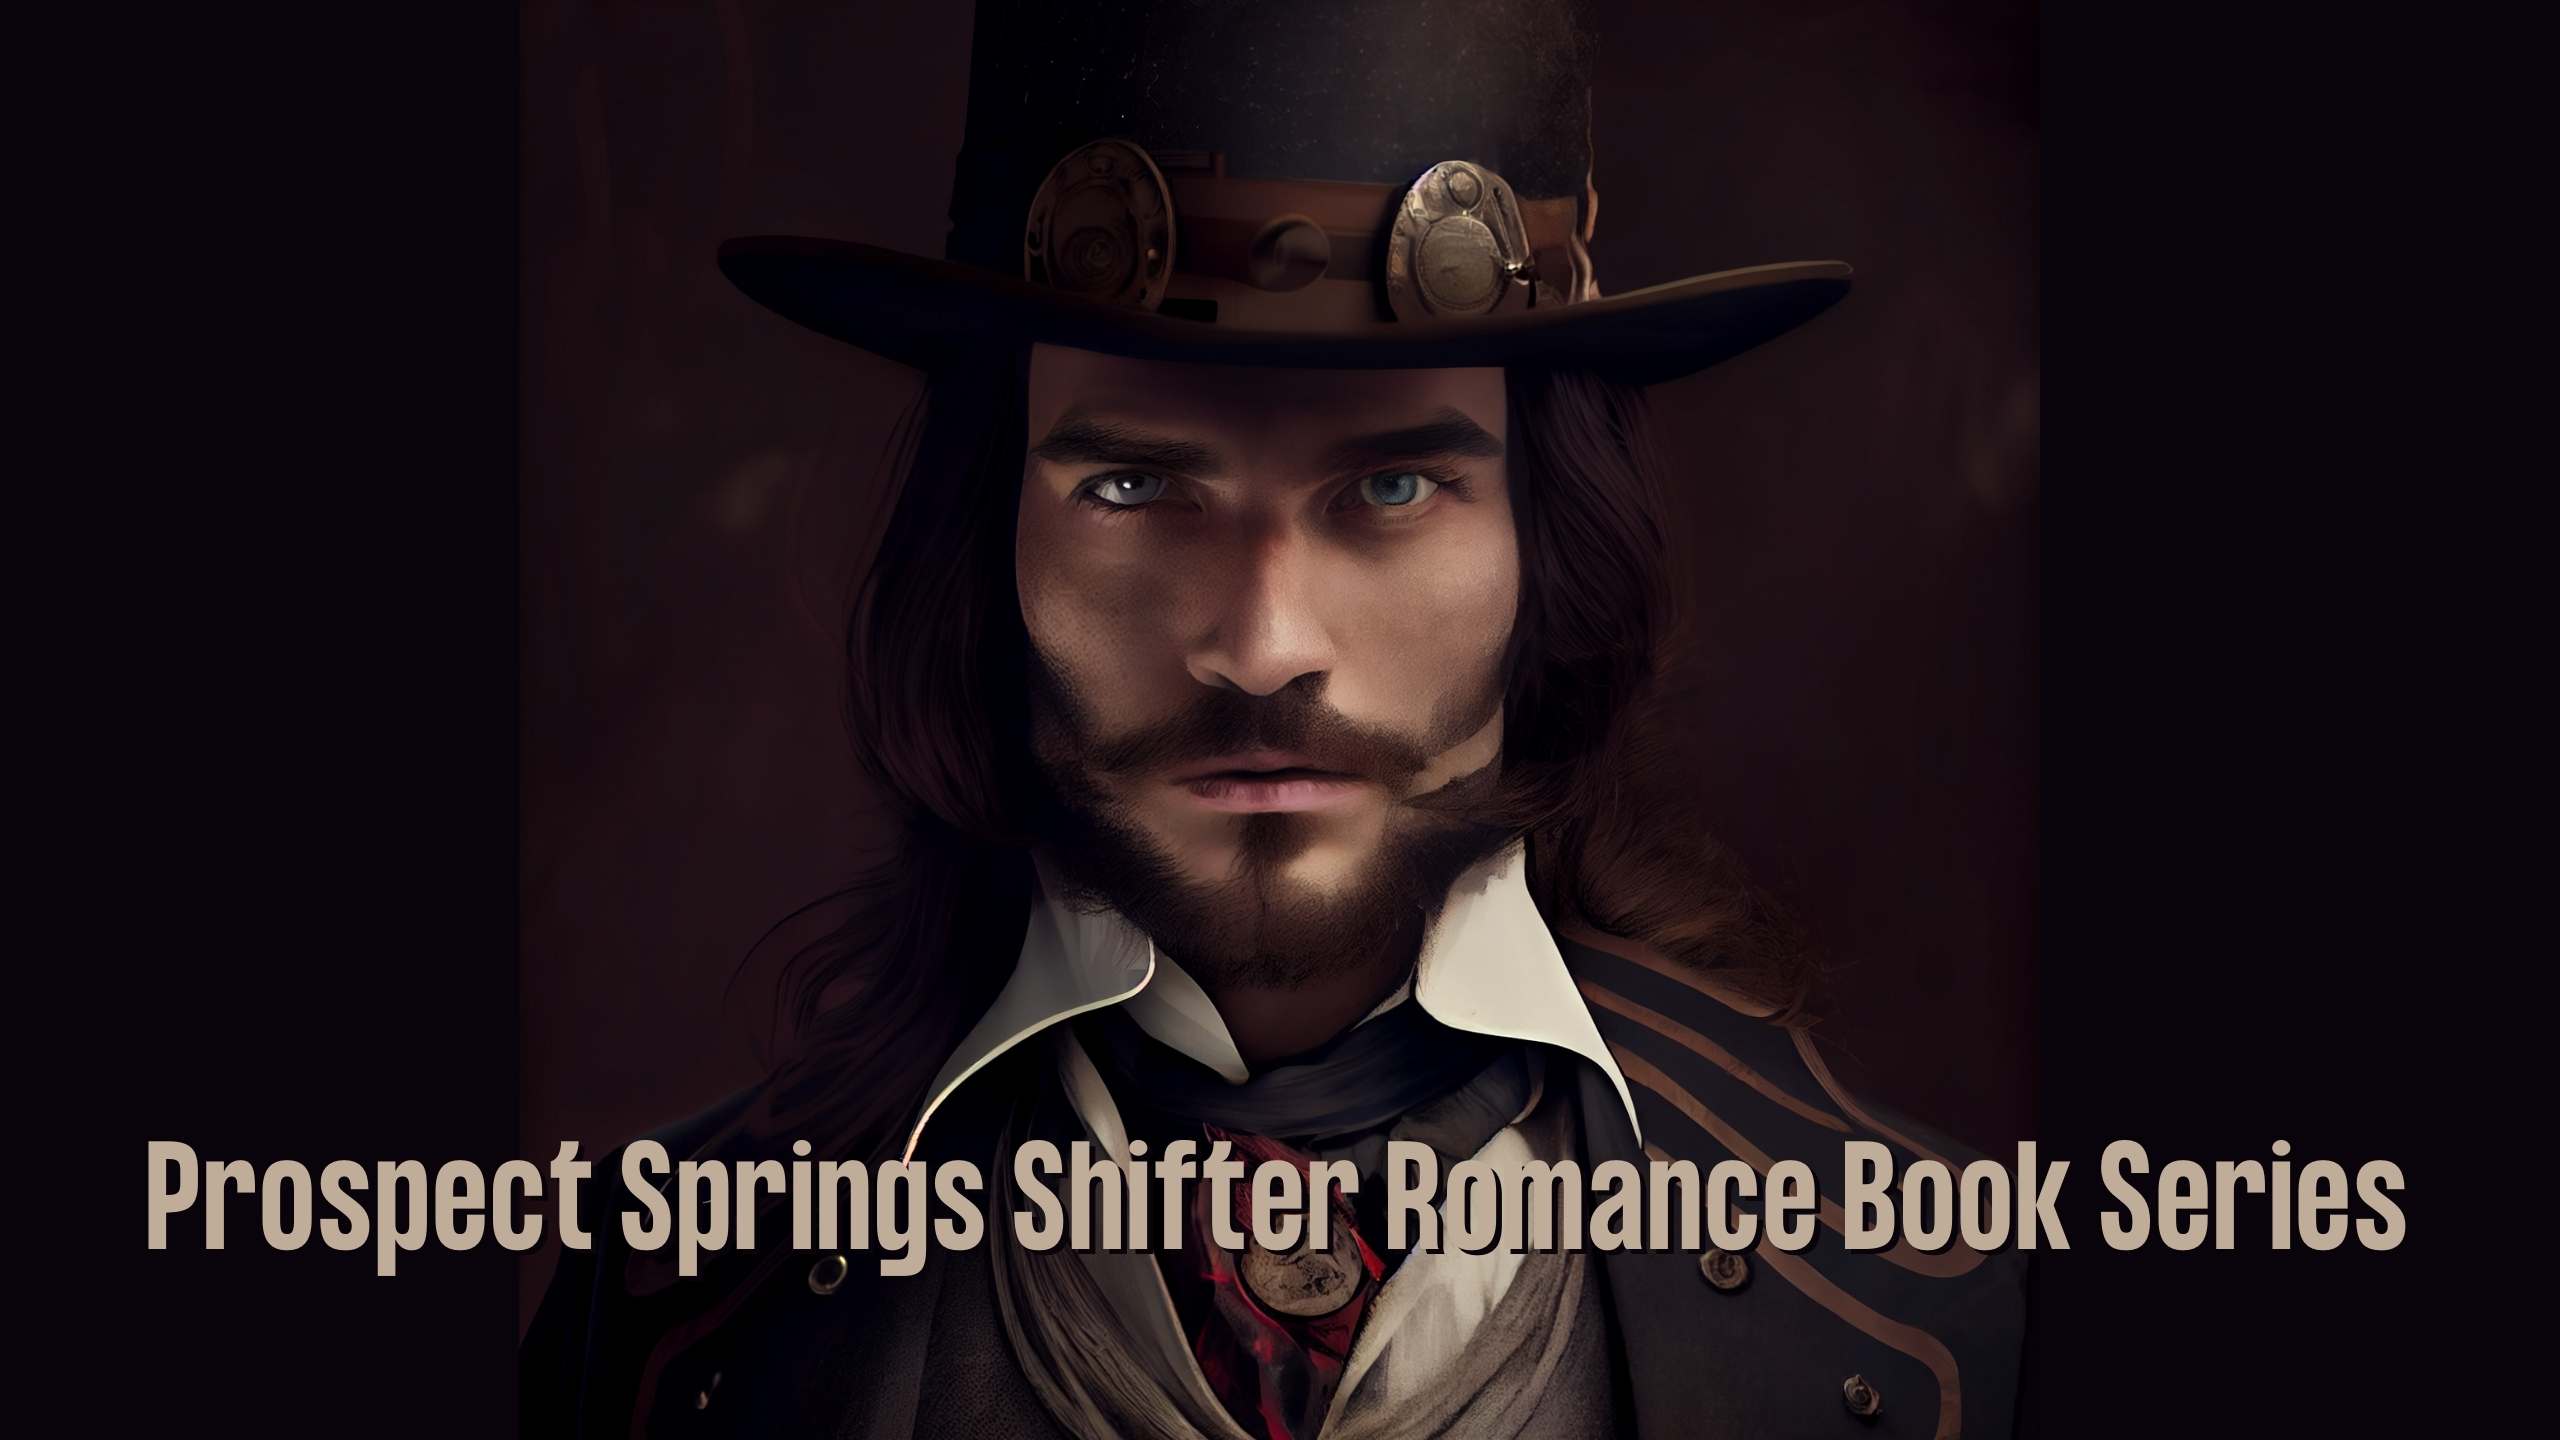 Prospect Springs Shifter romance series